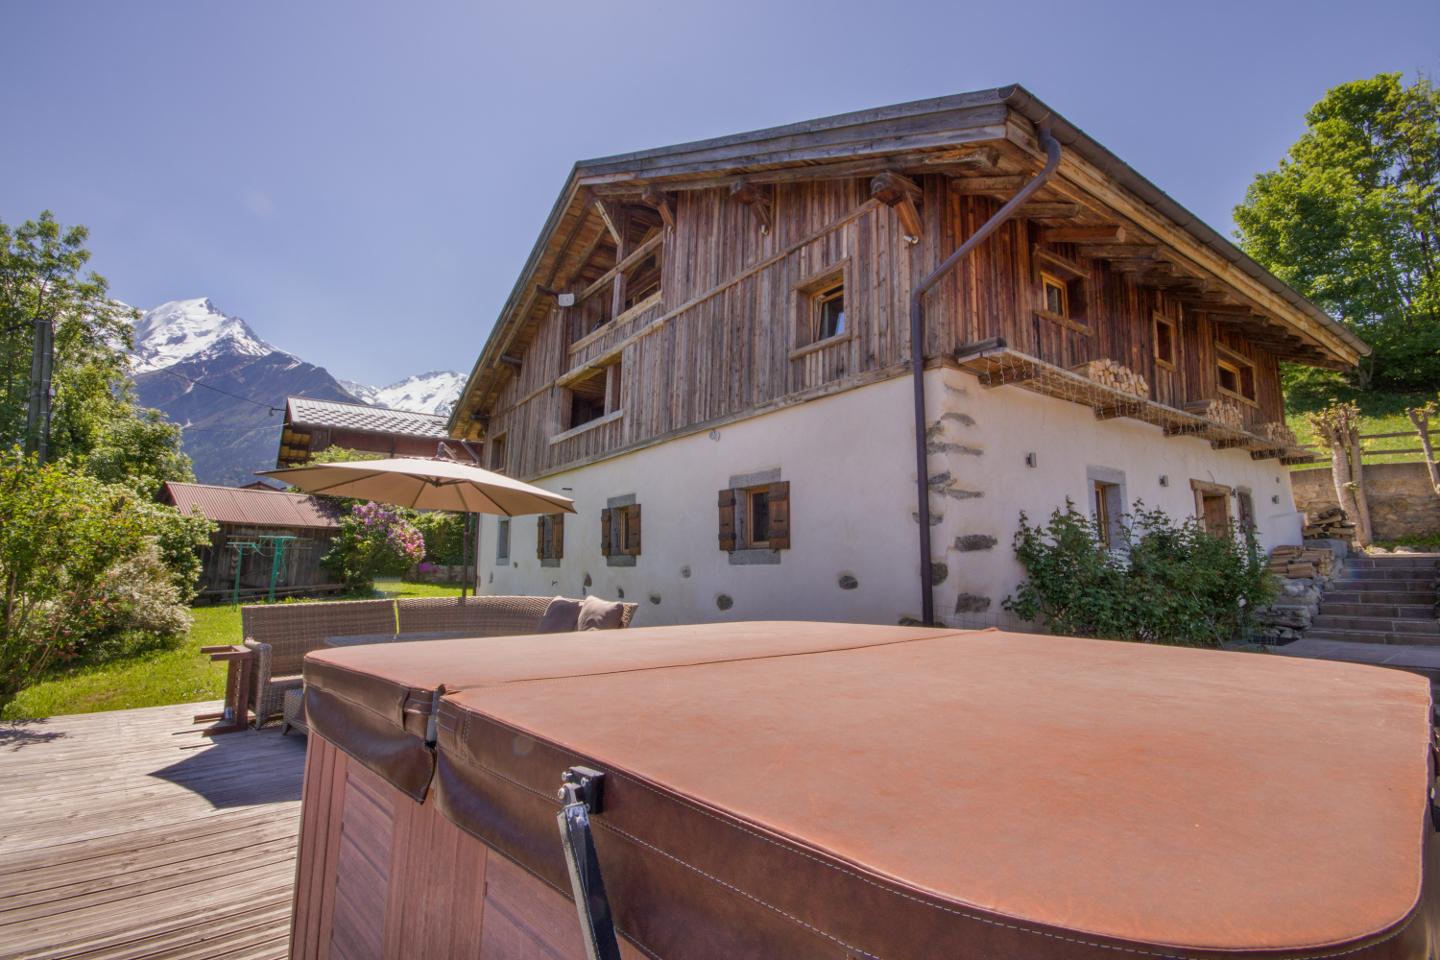 Hôte GreenGo: Wanderful Life Mont-Blanc